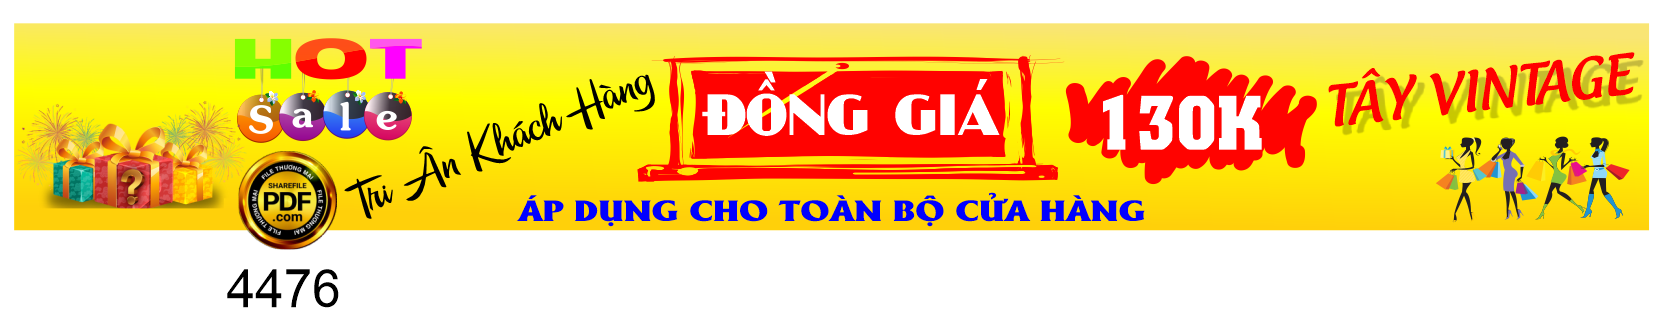 bang ron tri an khach hang don gia tay vintage.png